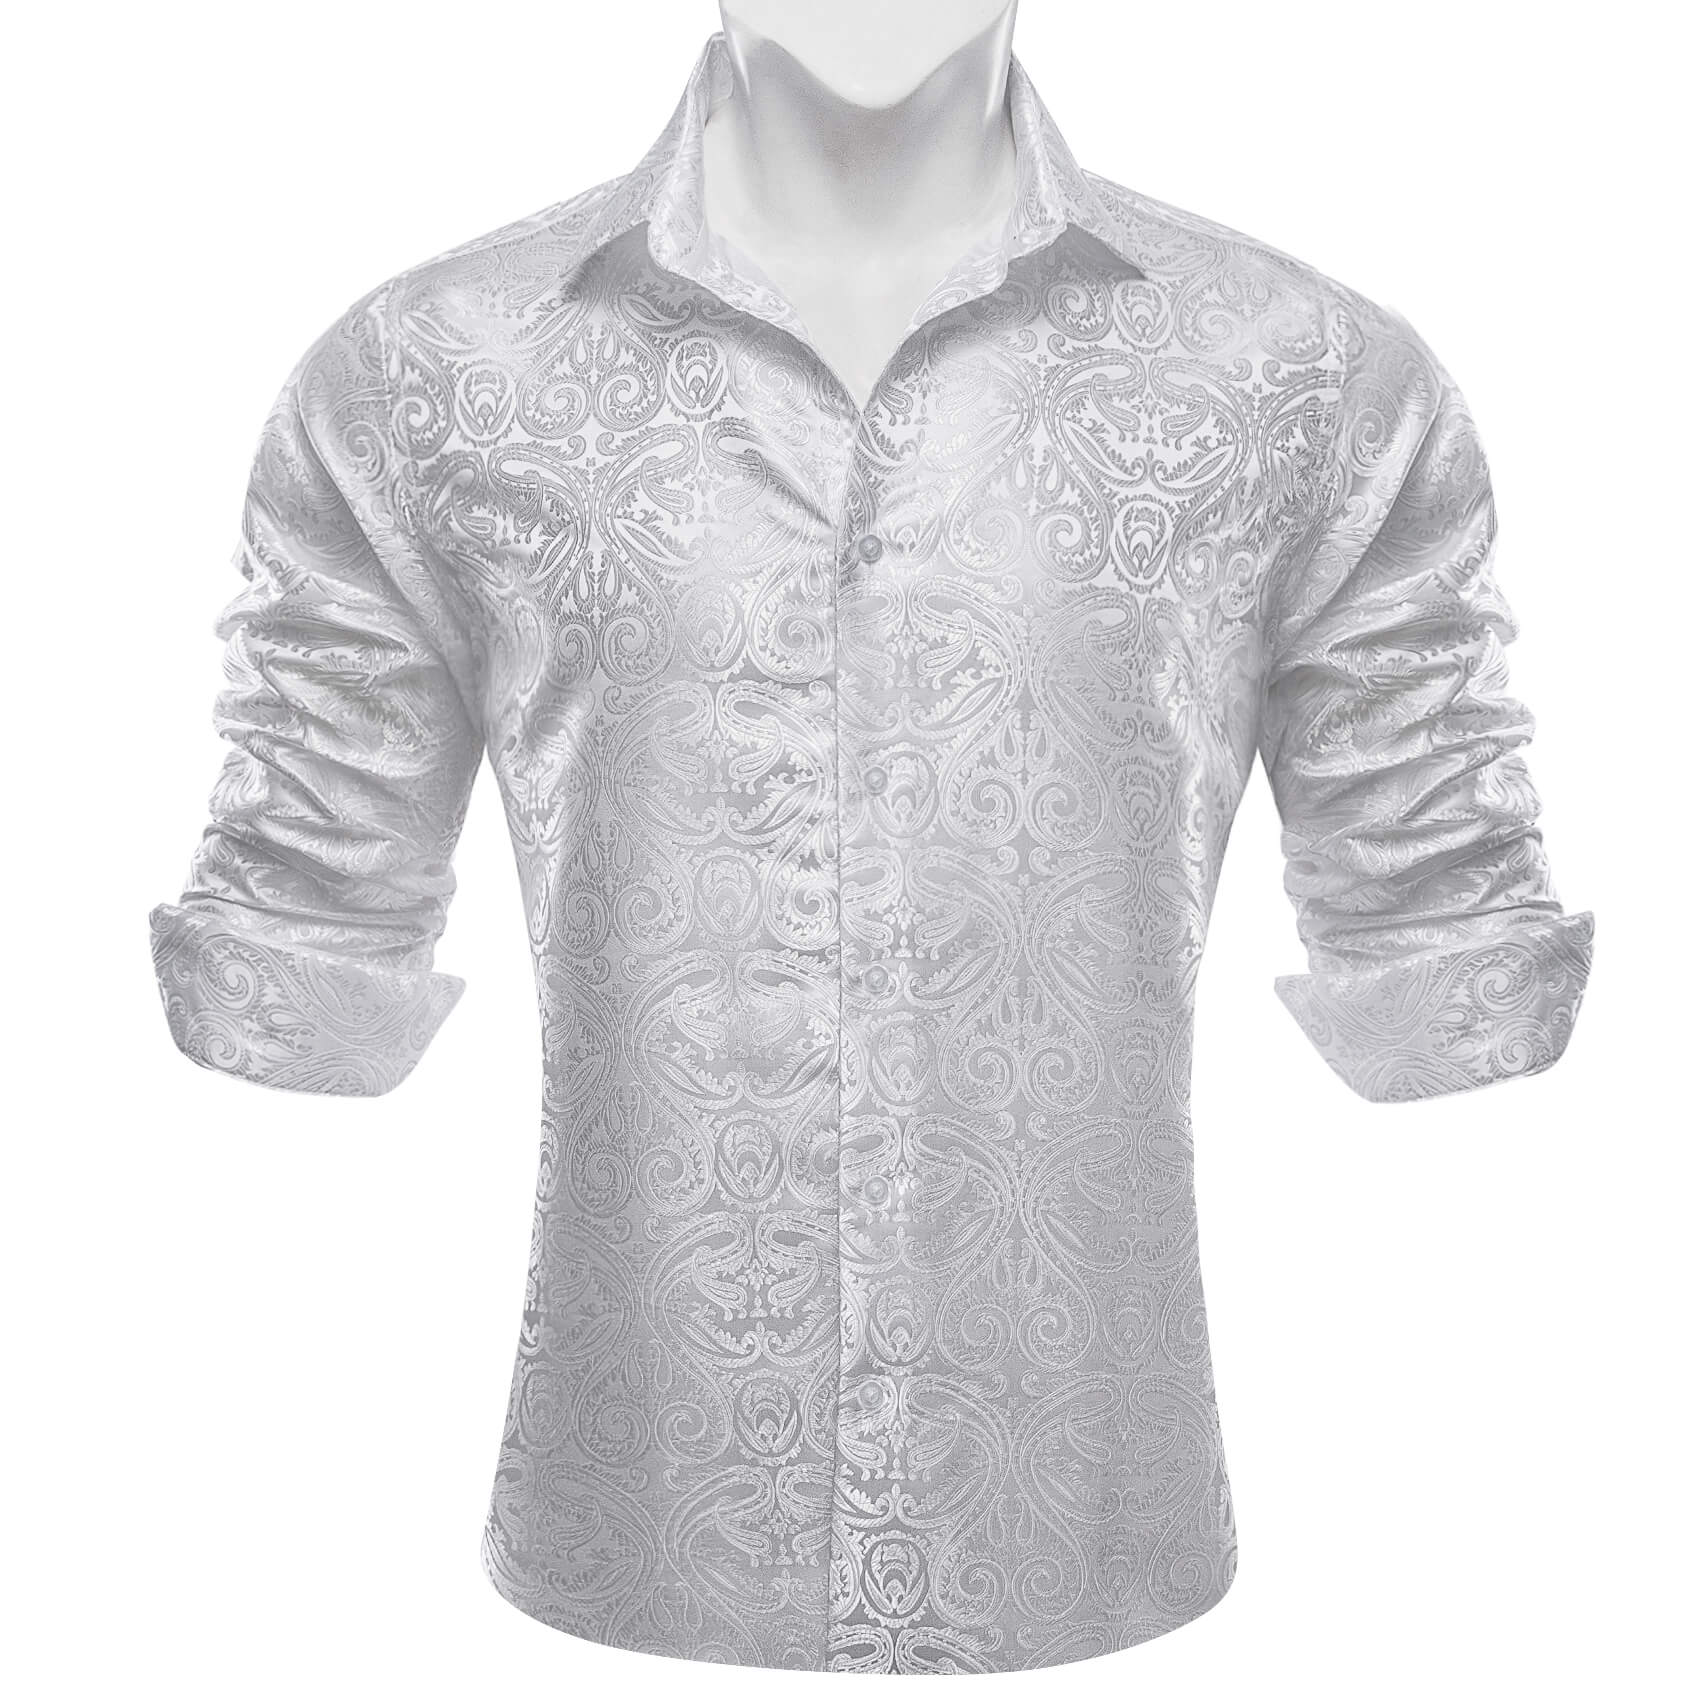 Barry Wang Button Down Shirt White Paisley Men's Silk Long Sleeve Shirt